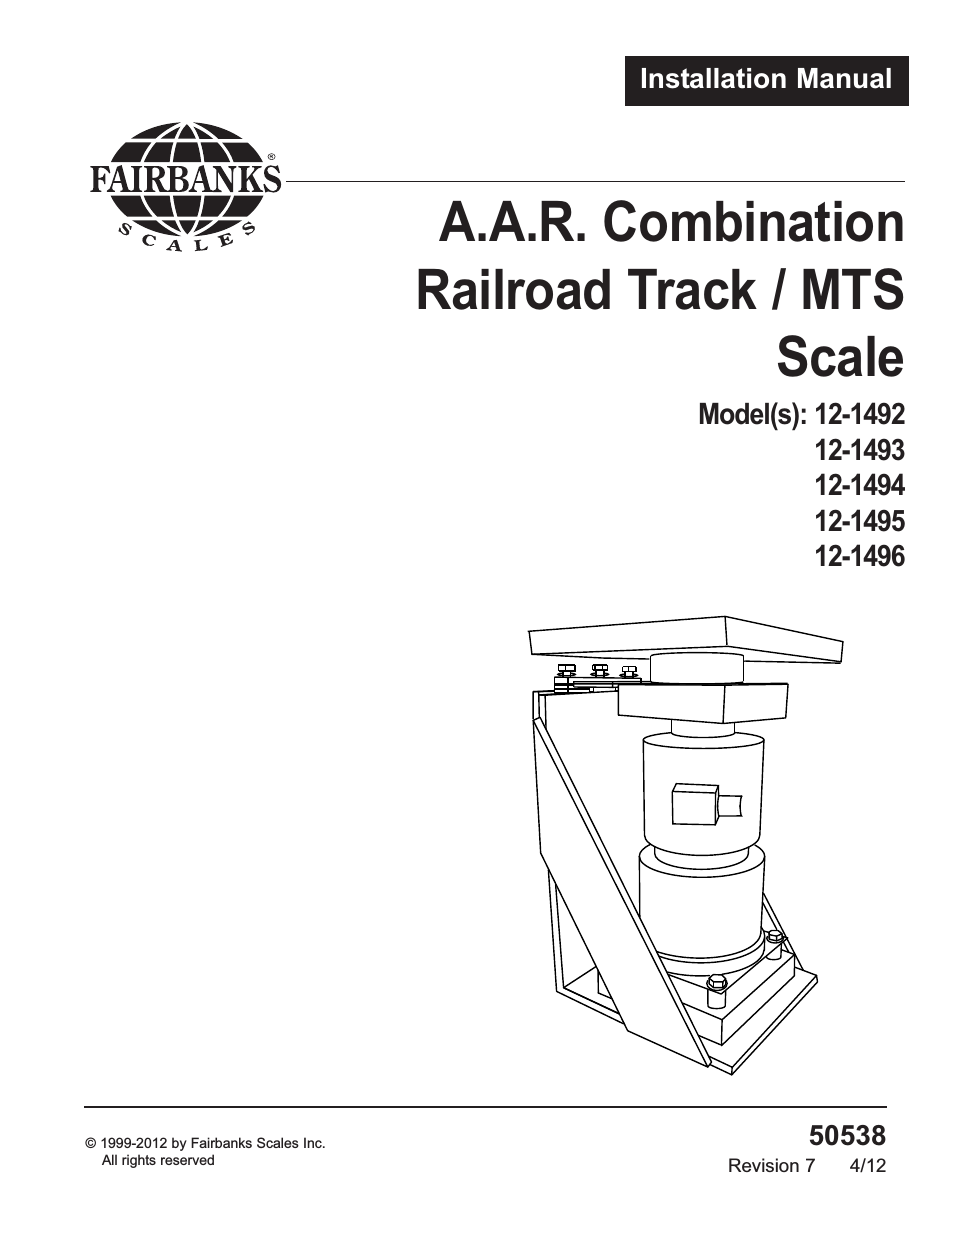 12-1492 - 12-1496 A.A.R. Combination Railroad Track/MTS